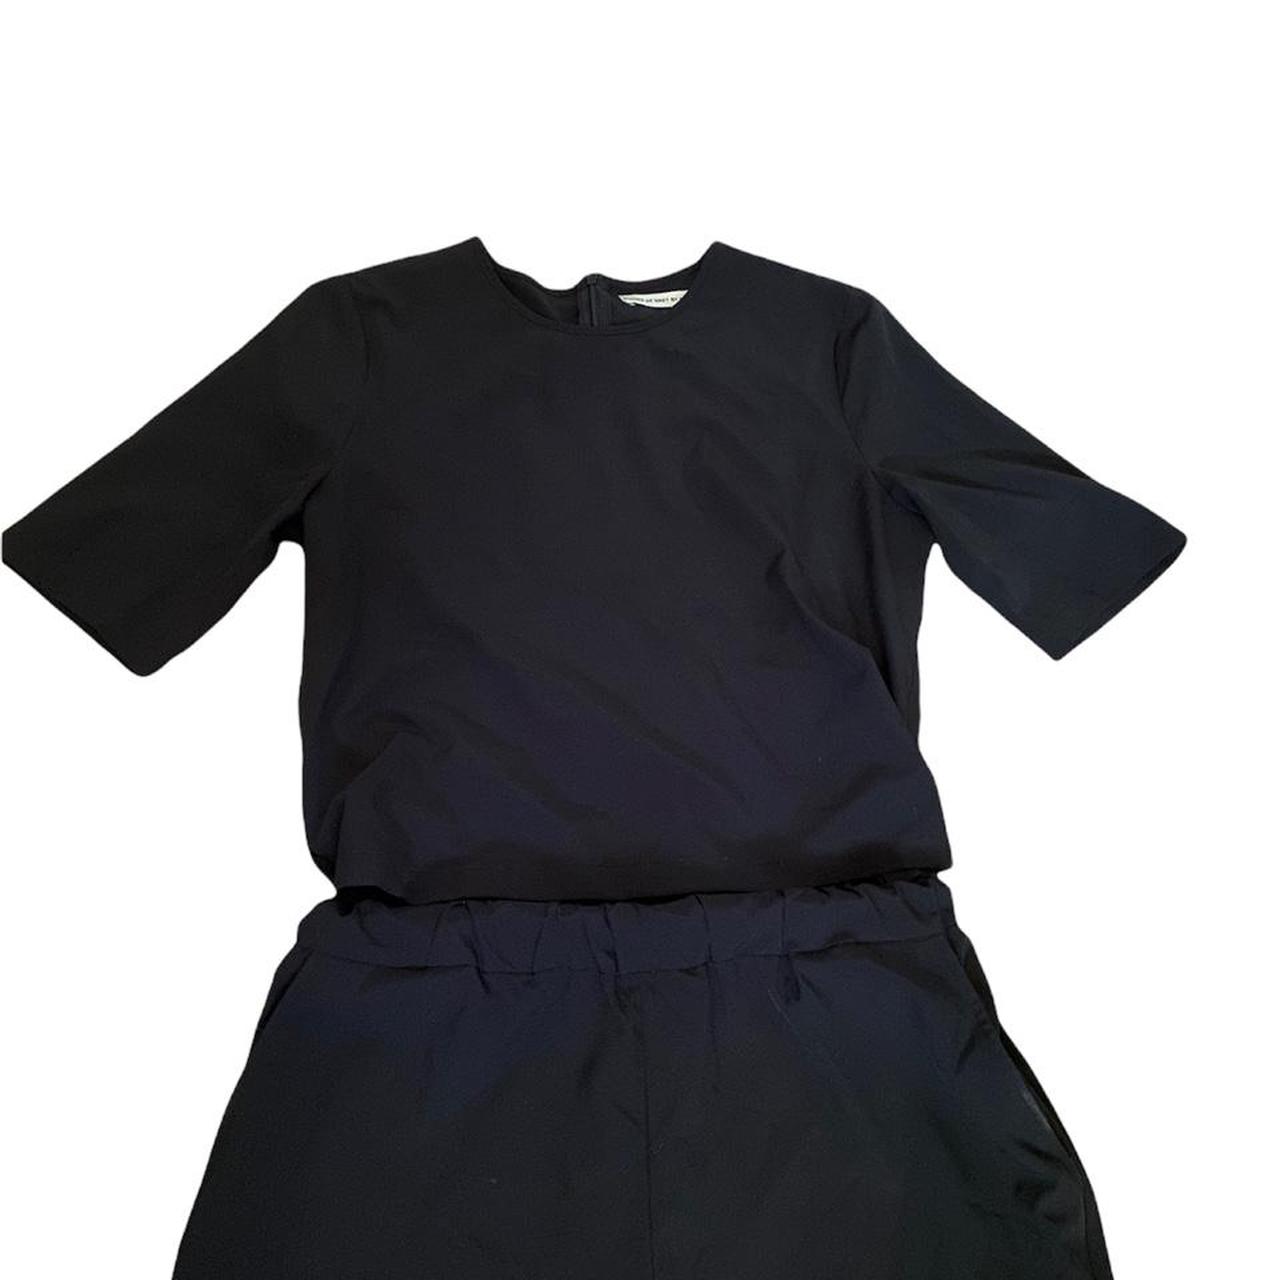 Product Image 2 - Modern black jumpsuit. Has cutout